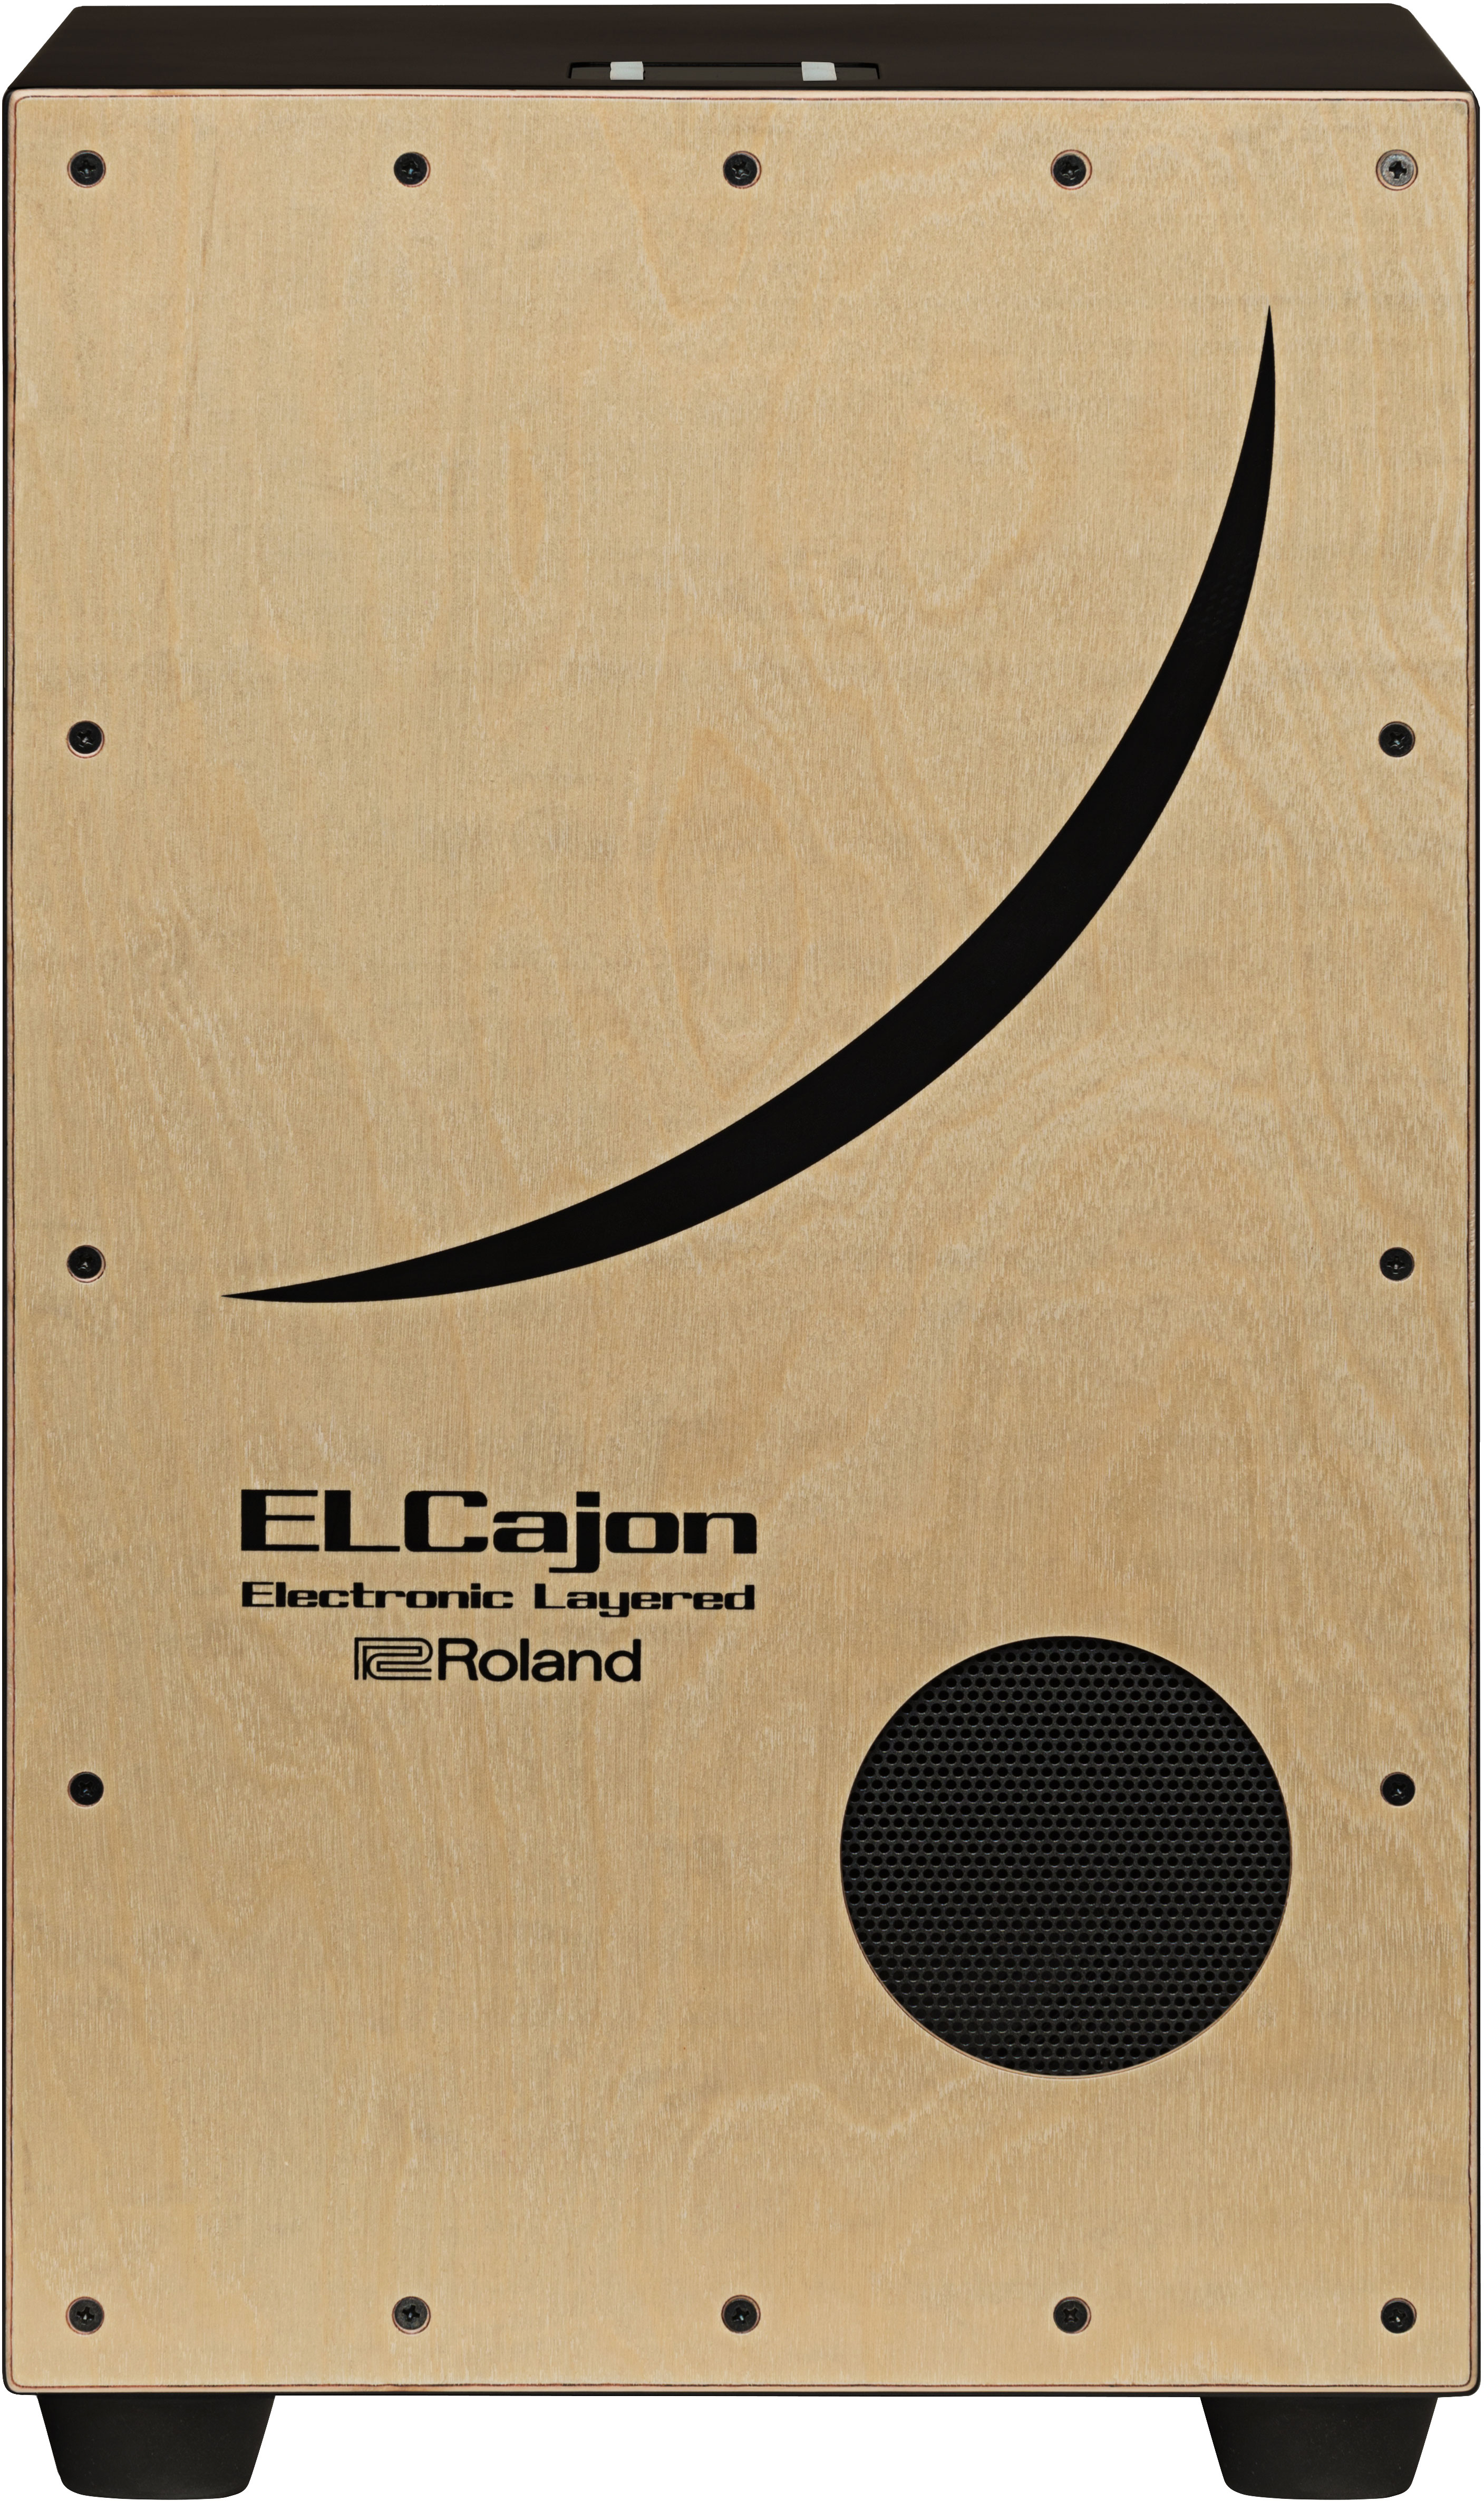 EC-10 EL Electronic Cajon